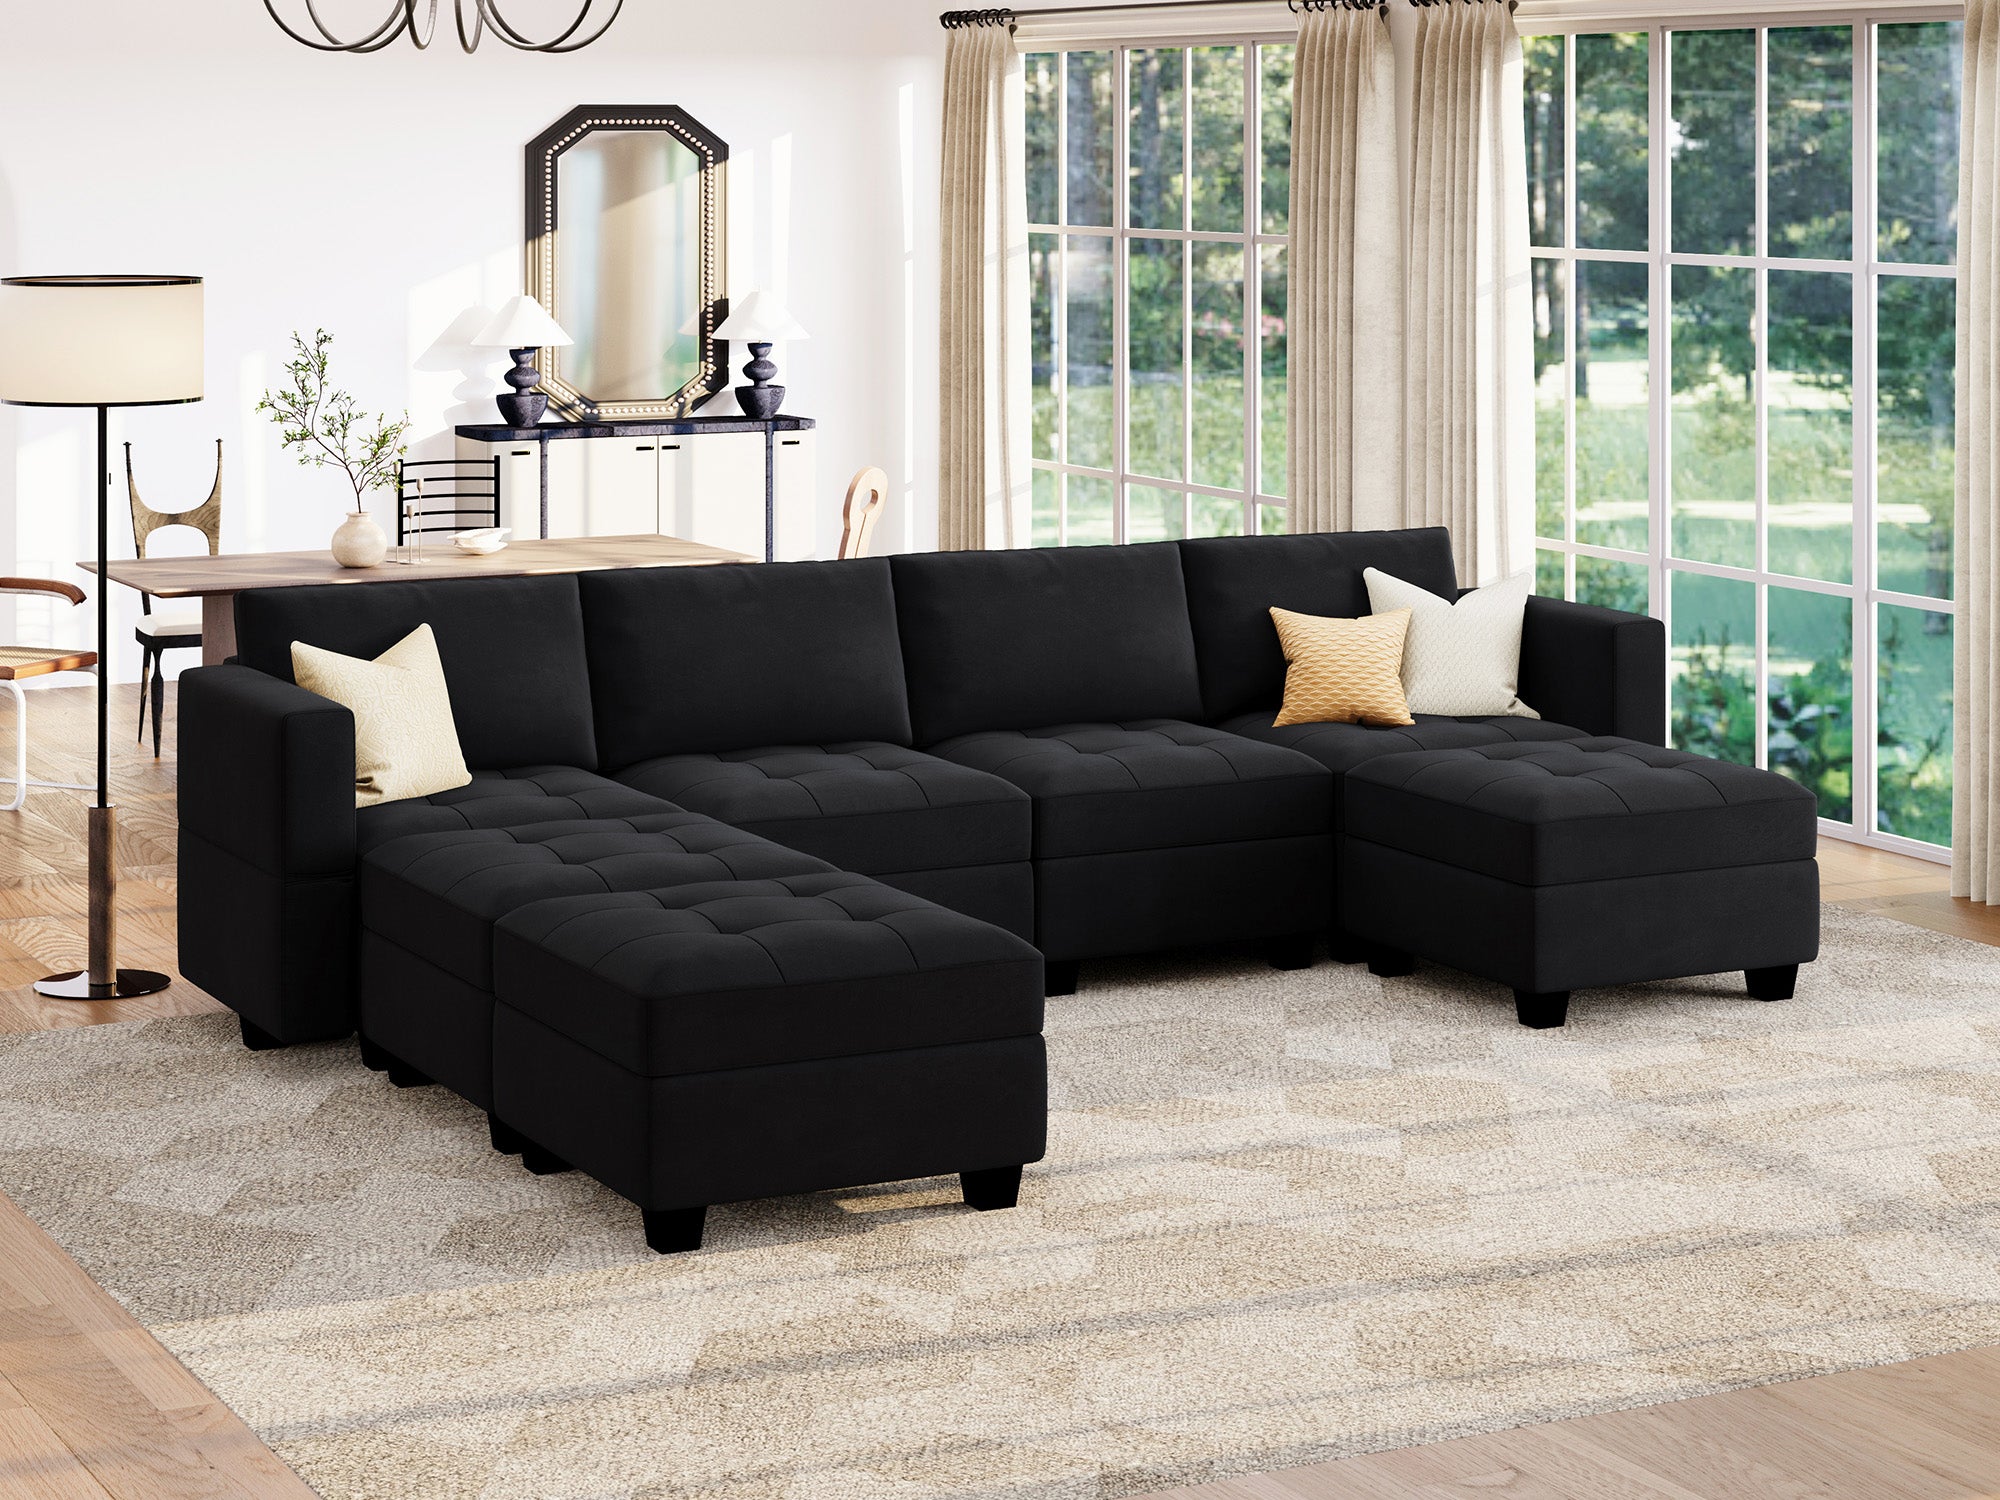 HONBAY 7-Piece Velvet Modular Sectional Adjustable Sofa With Storage Seat